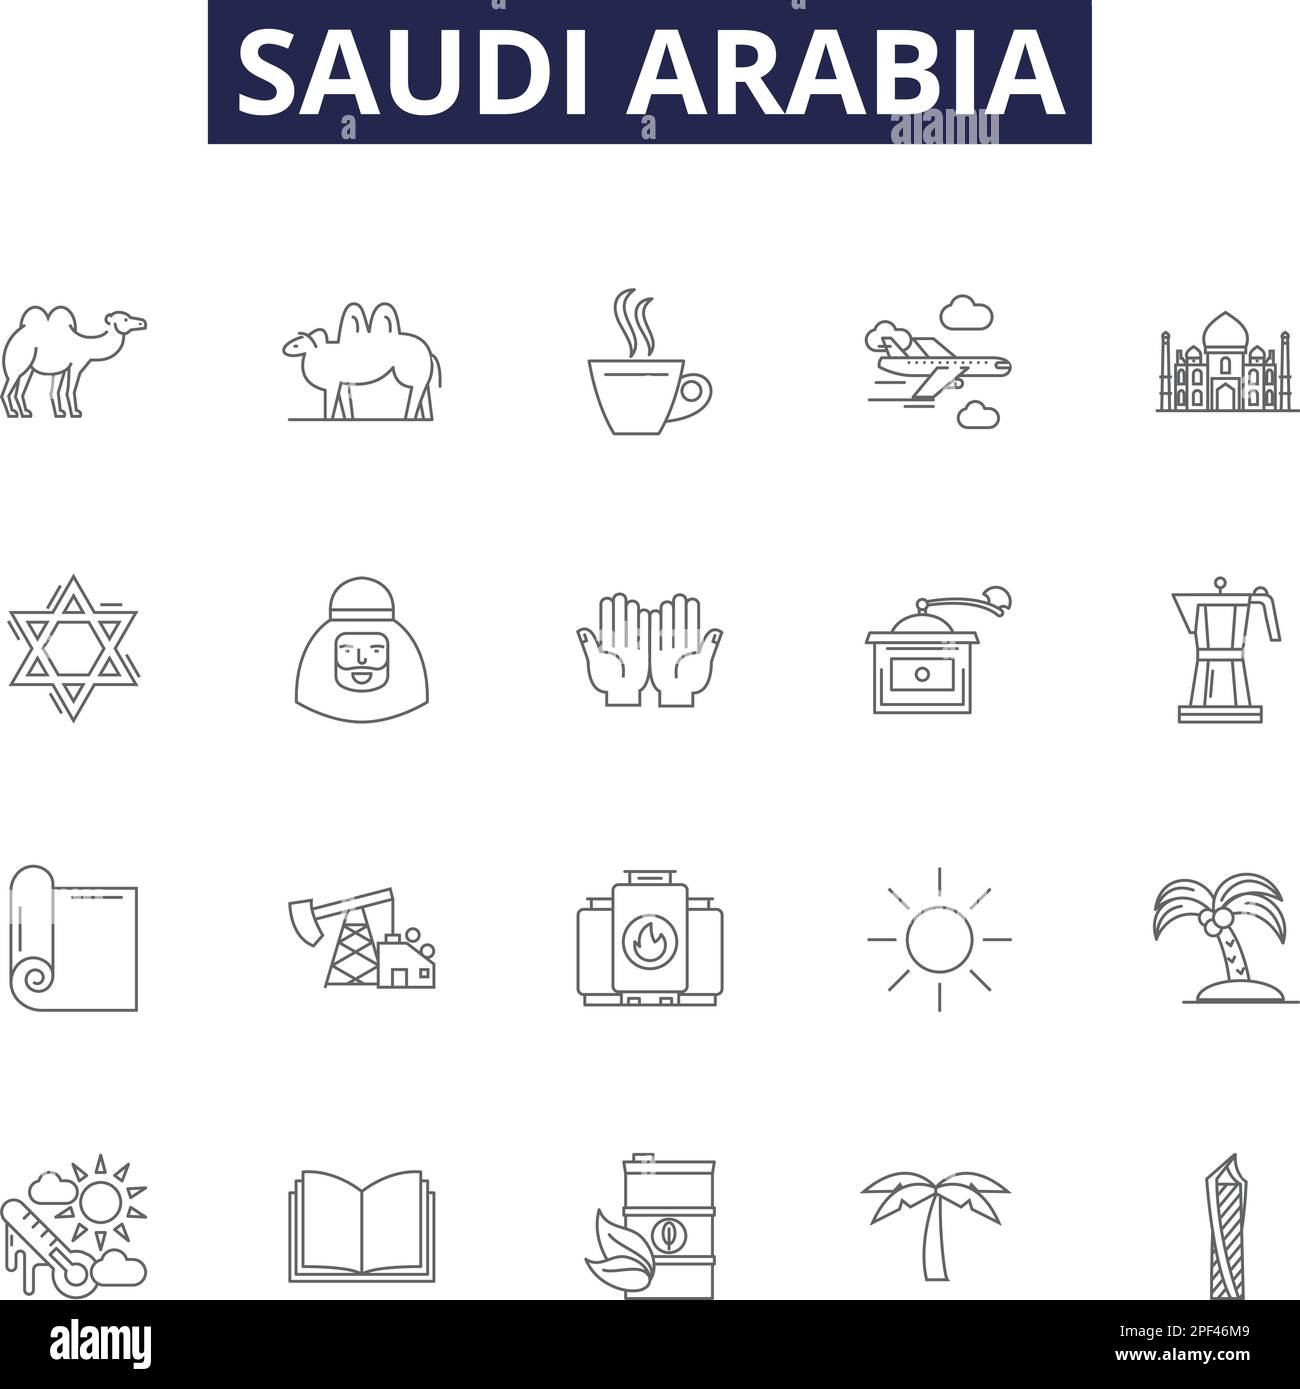 Saudi arabia line vector icons and signs. Arabia, Middle East, Oil, Despotism, Islam, Desert, Religious, Riyadh outline vector illustration set Stock Vector